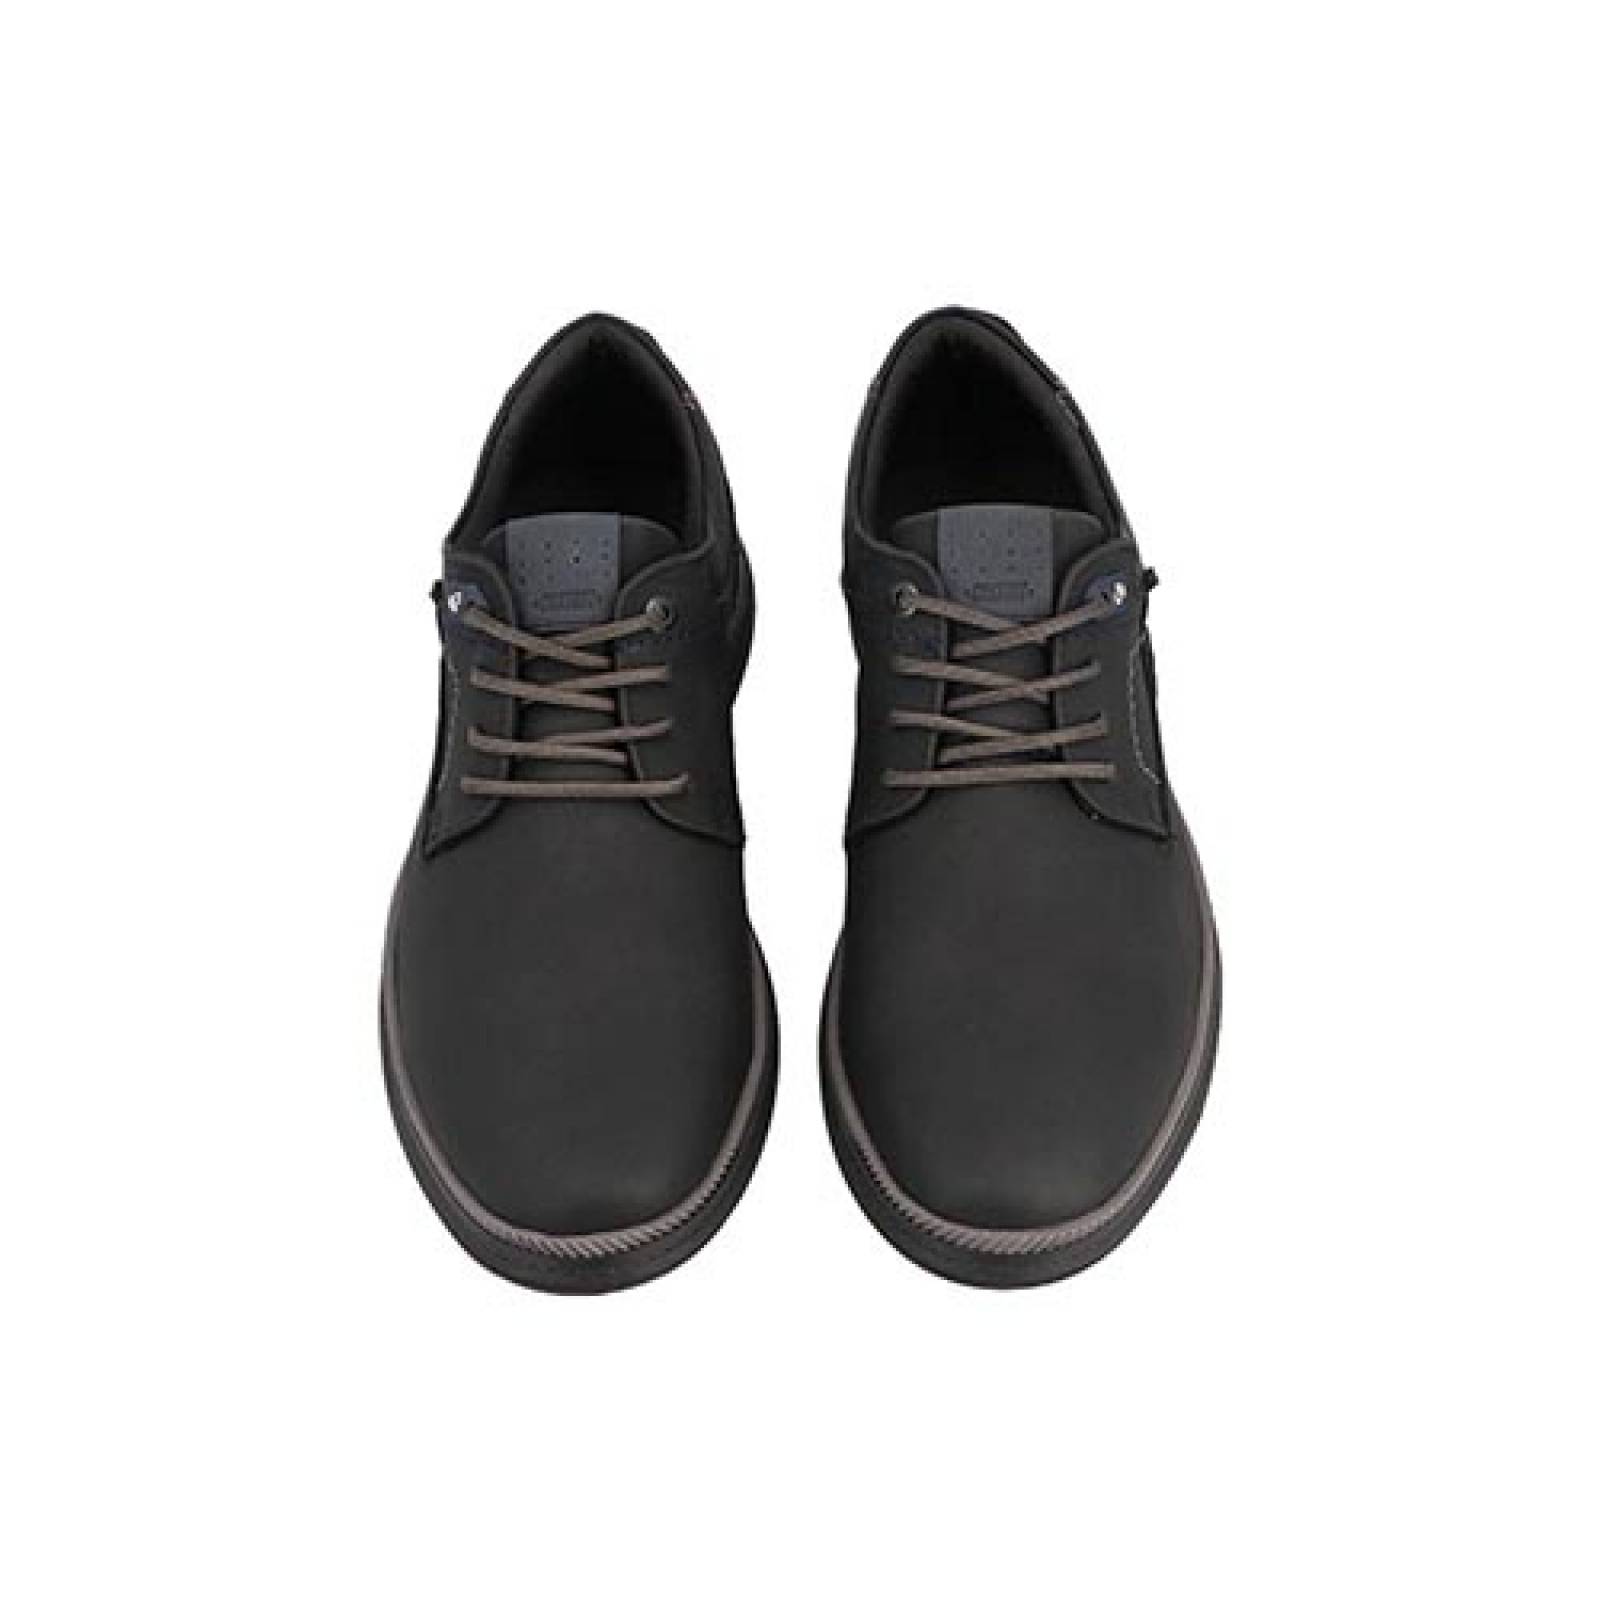 Zapatos Hombre Casuales Custom Style Color Negro Guante Para Caballero